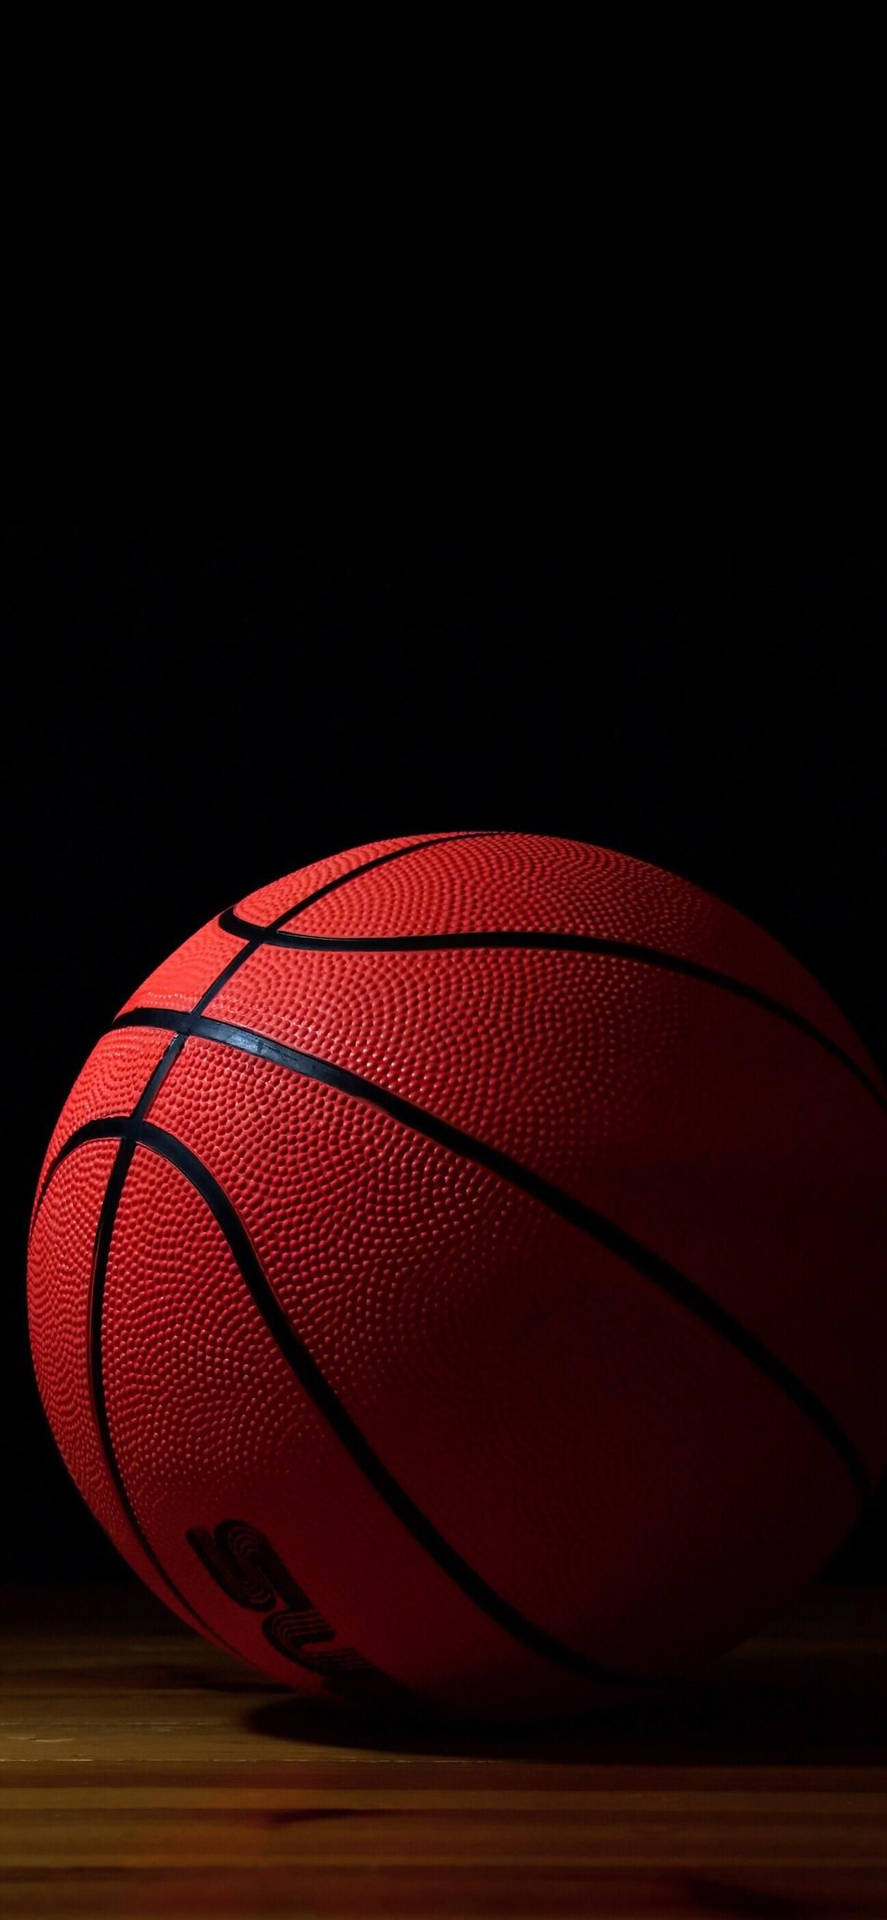 Basketballauf Dem Hartholzboden Sport Iphone Wallpaper